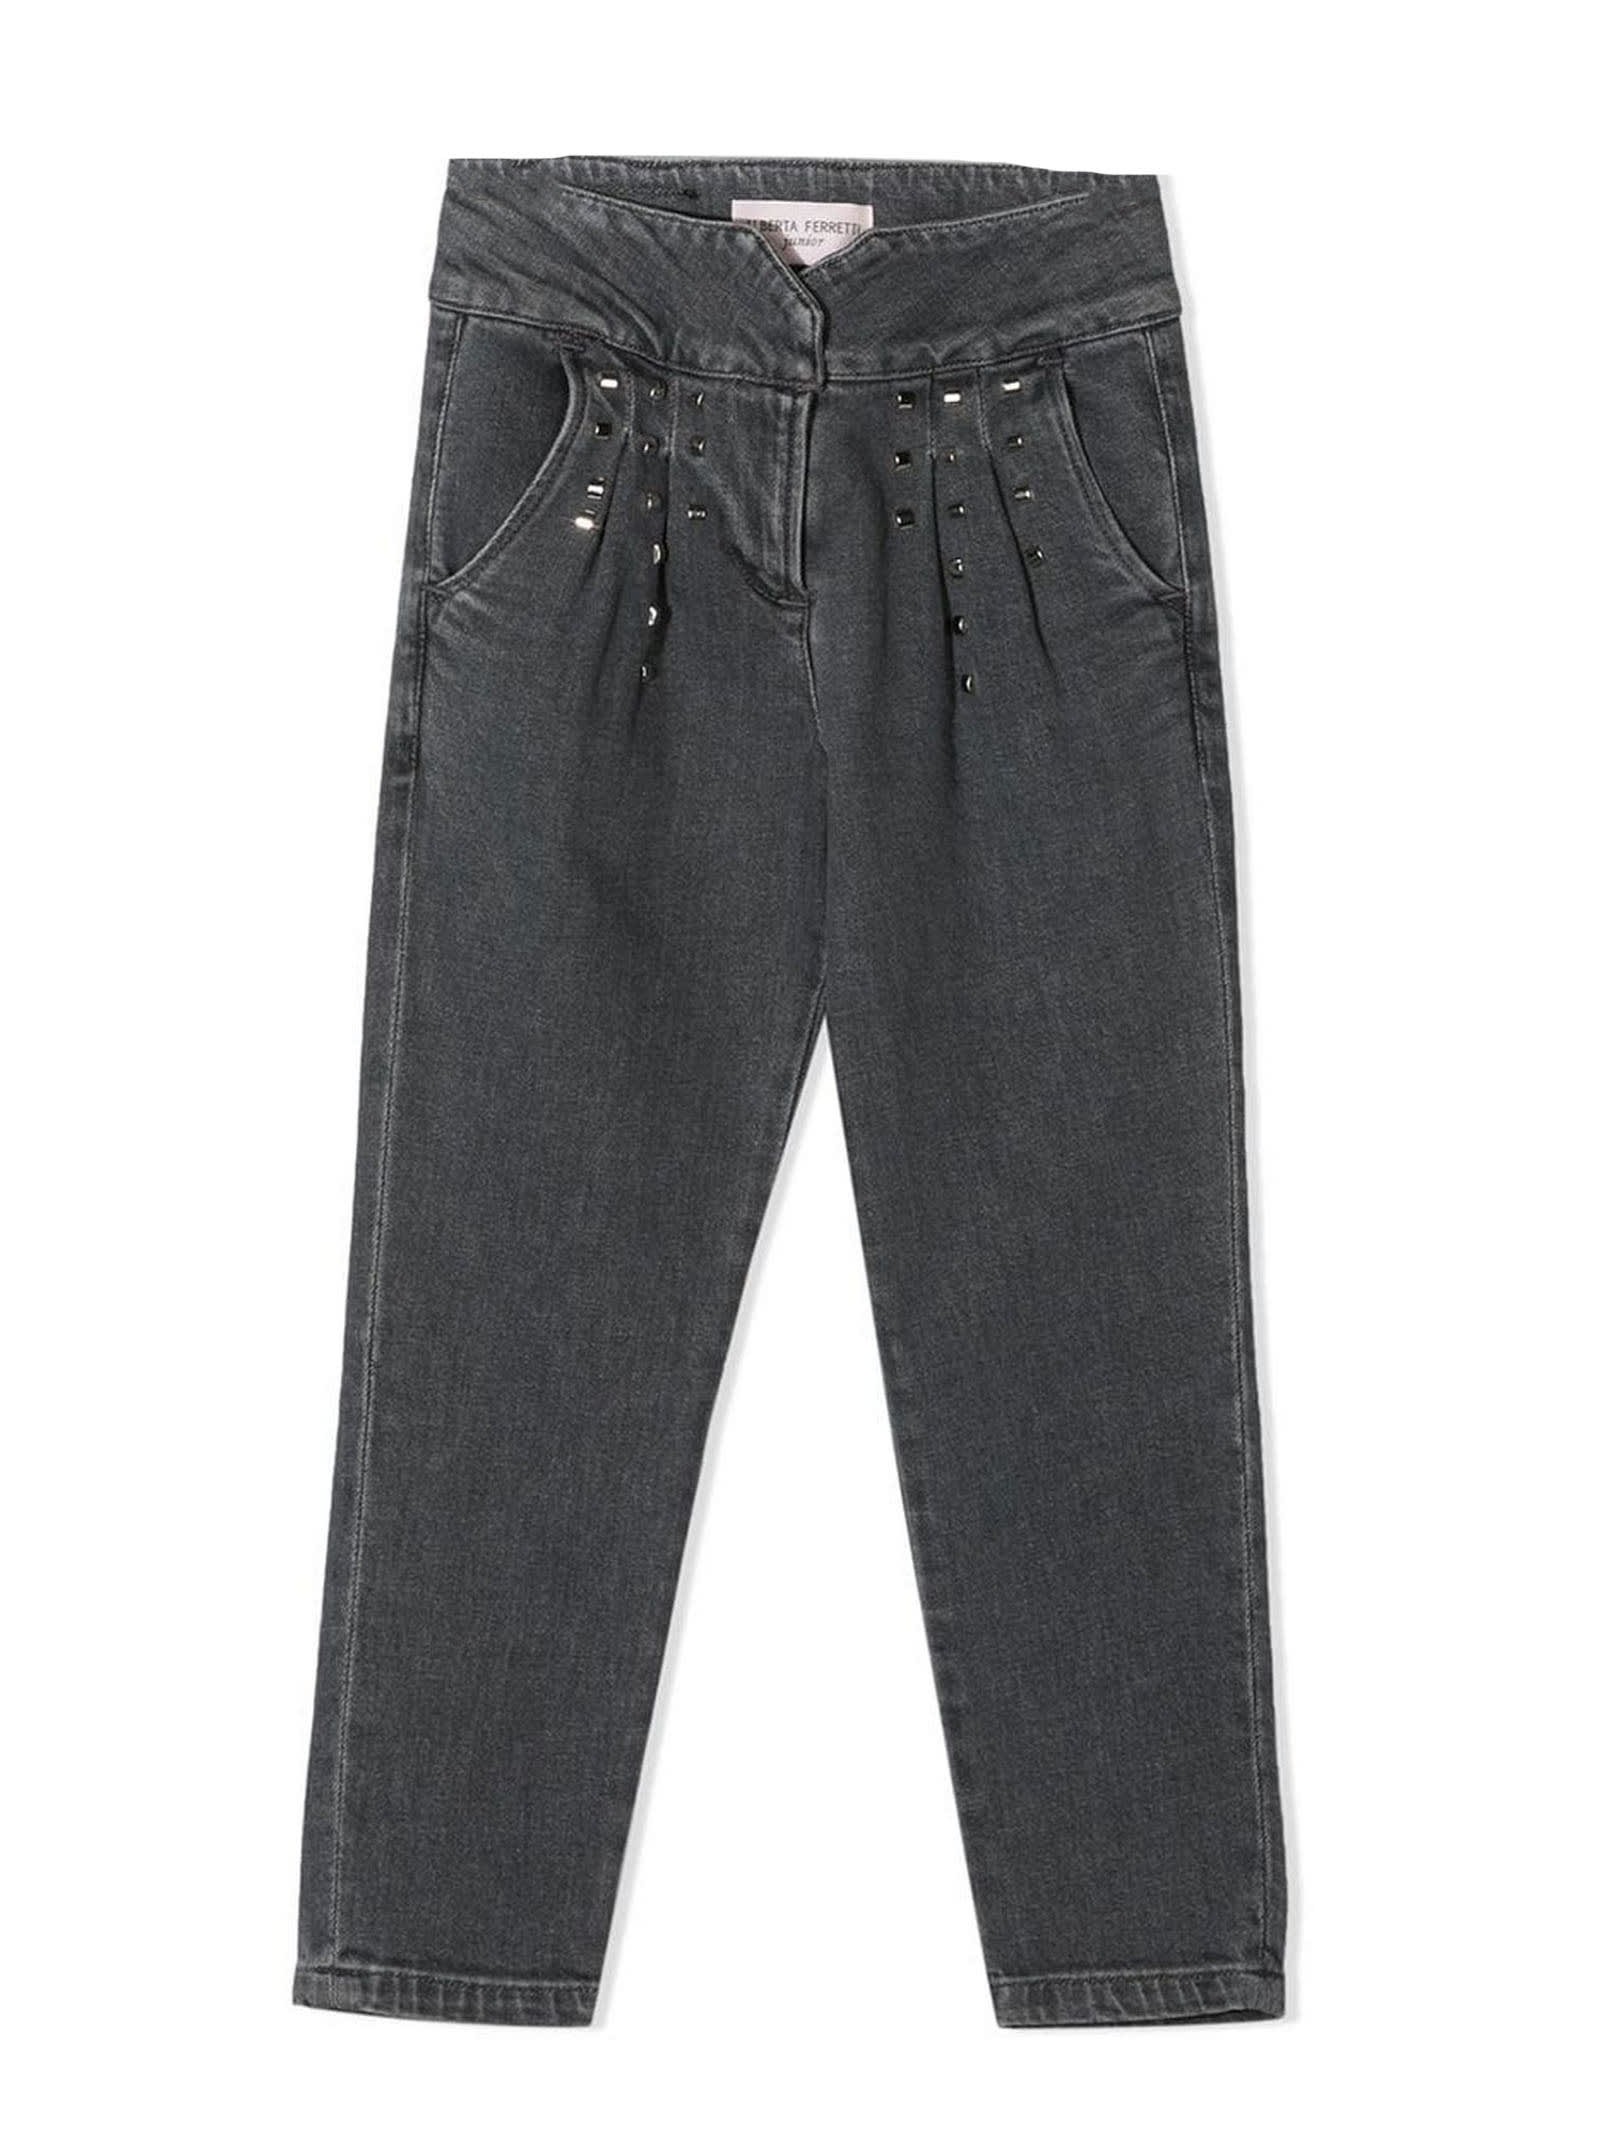 Alberta Ferretti Grey Cotton Studded Jeans